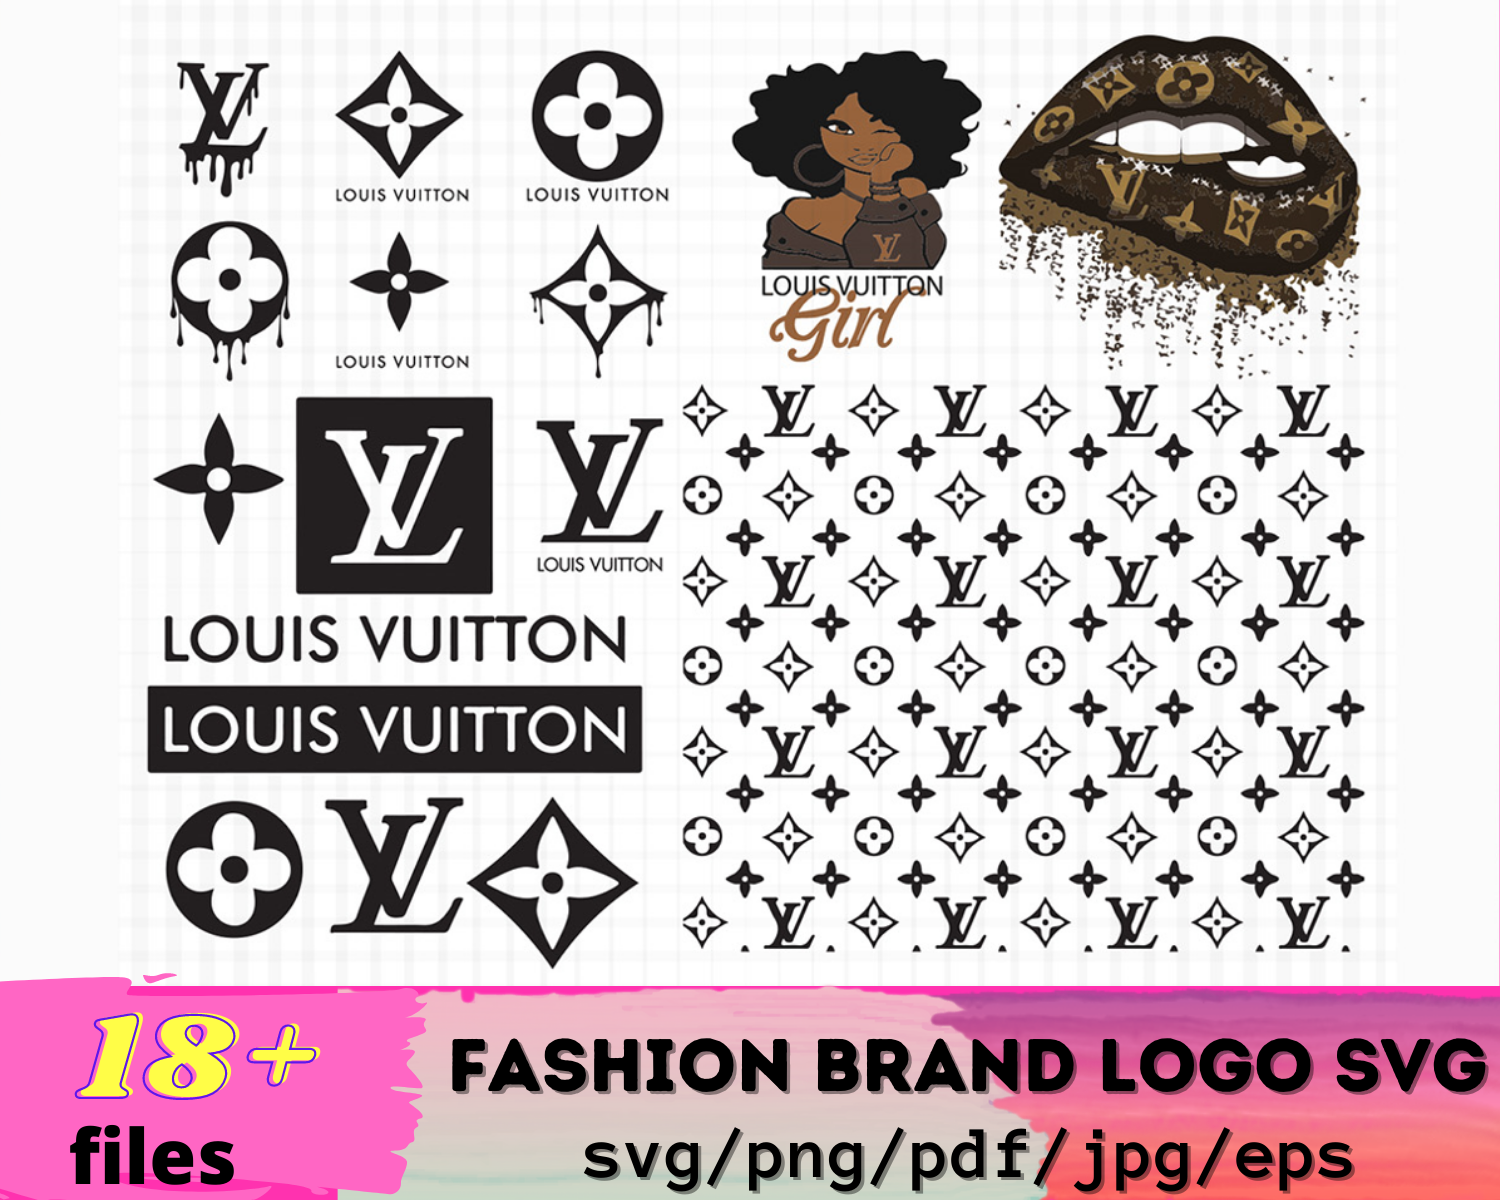 10+ Fashion Logo Svg, Brand Logo Svg, Famous Brand Svg, Brand Svg ...